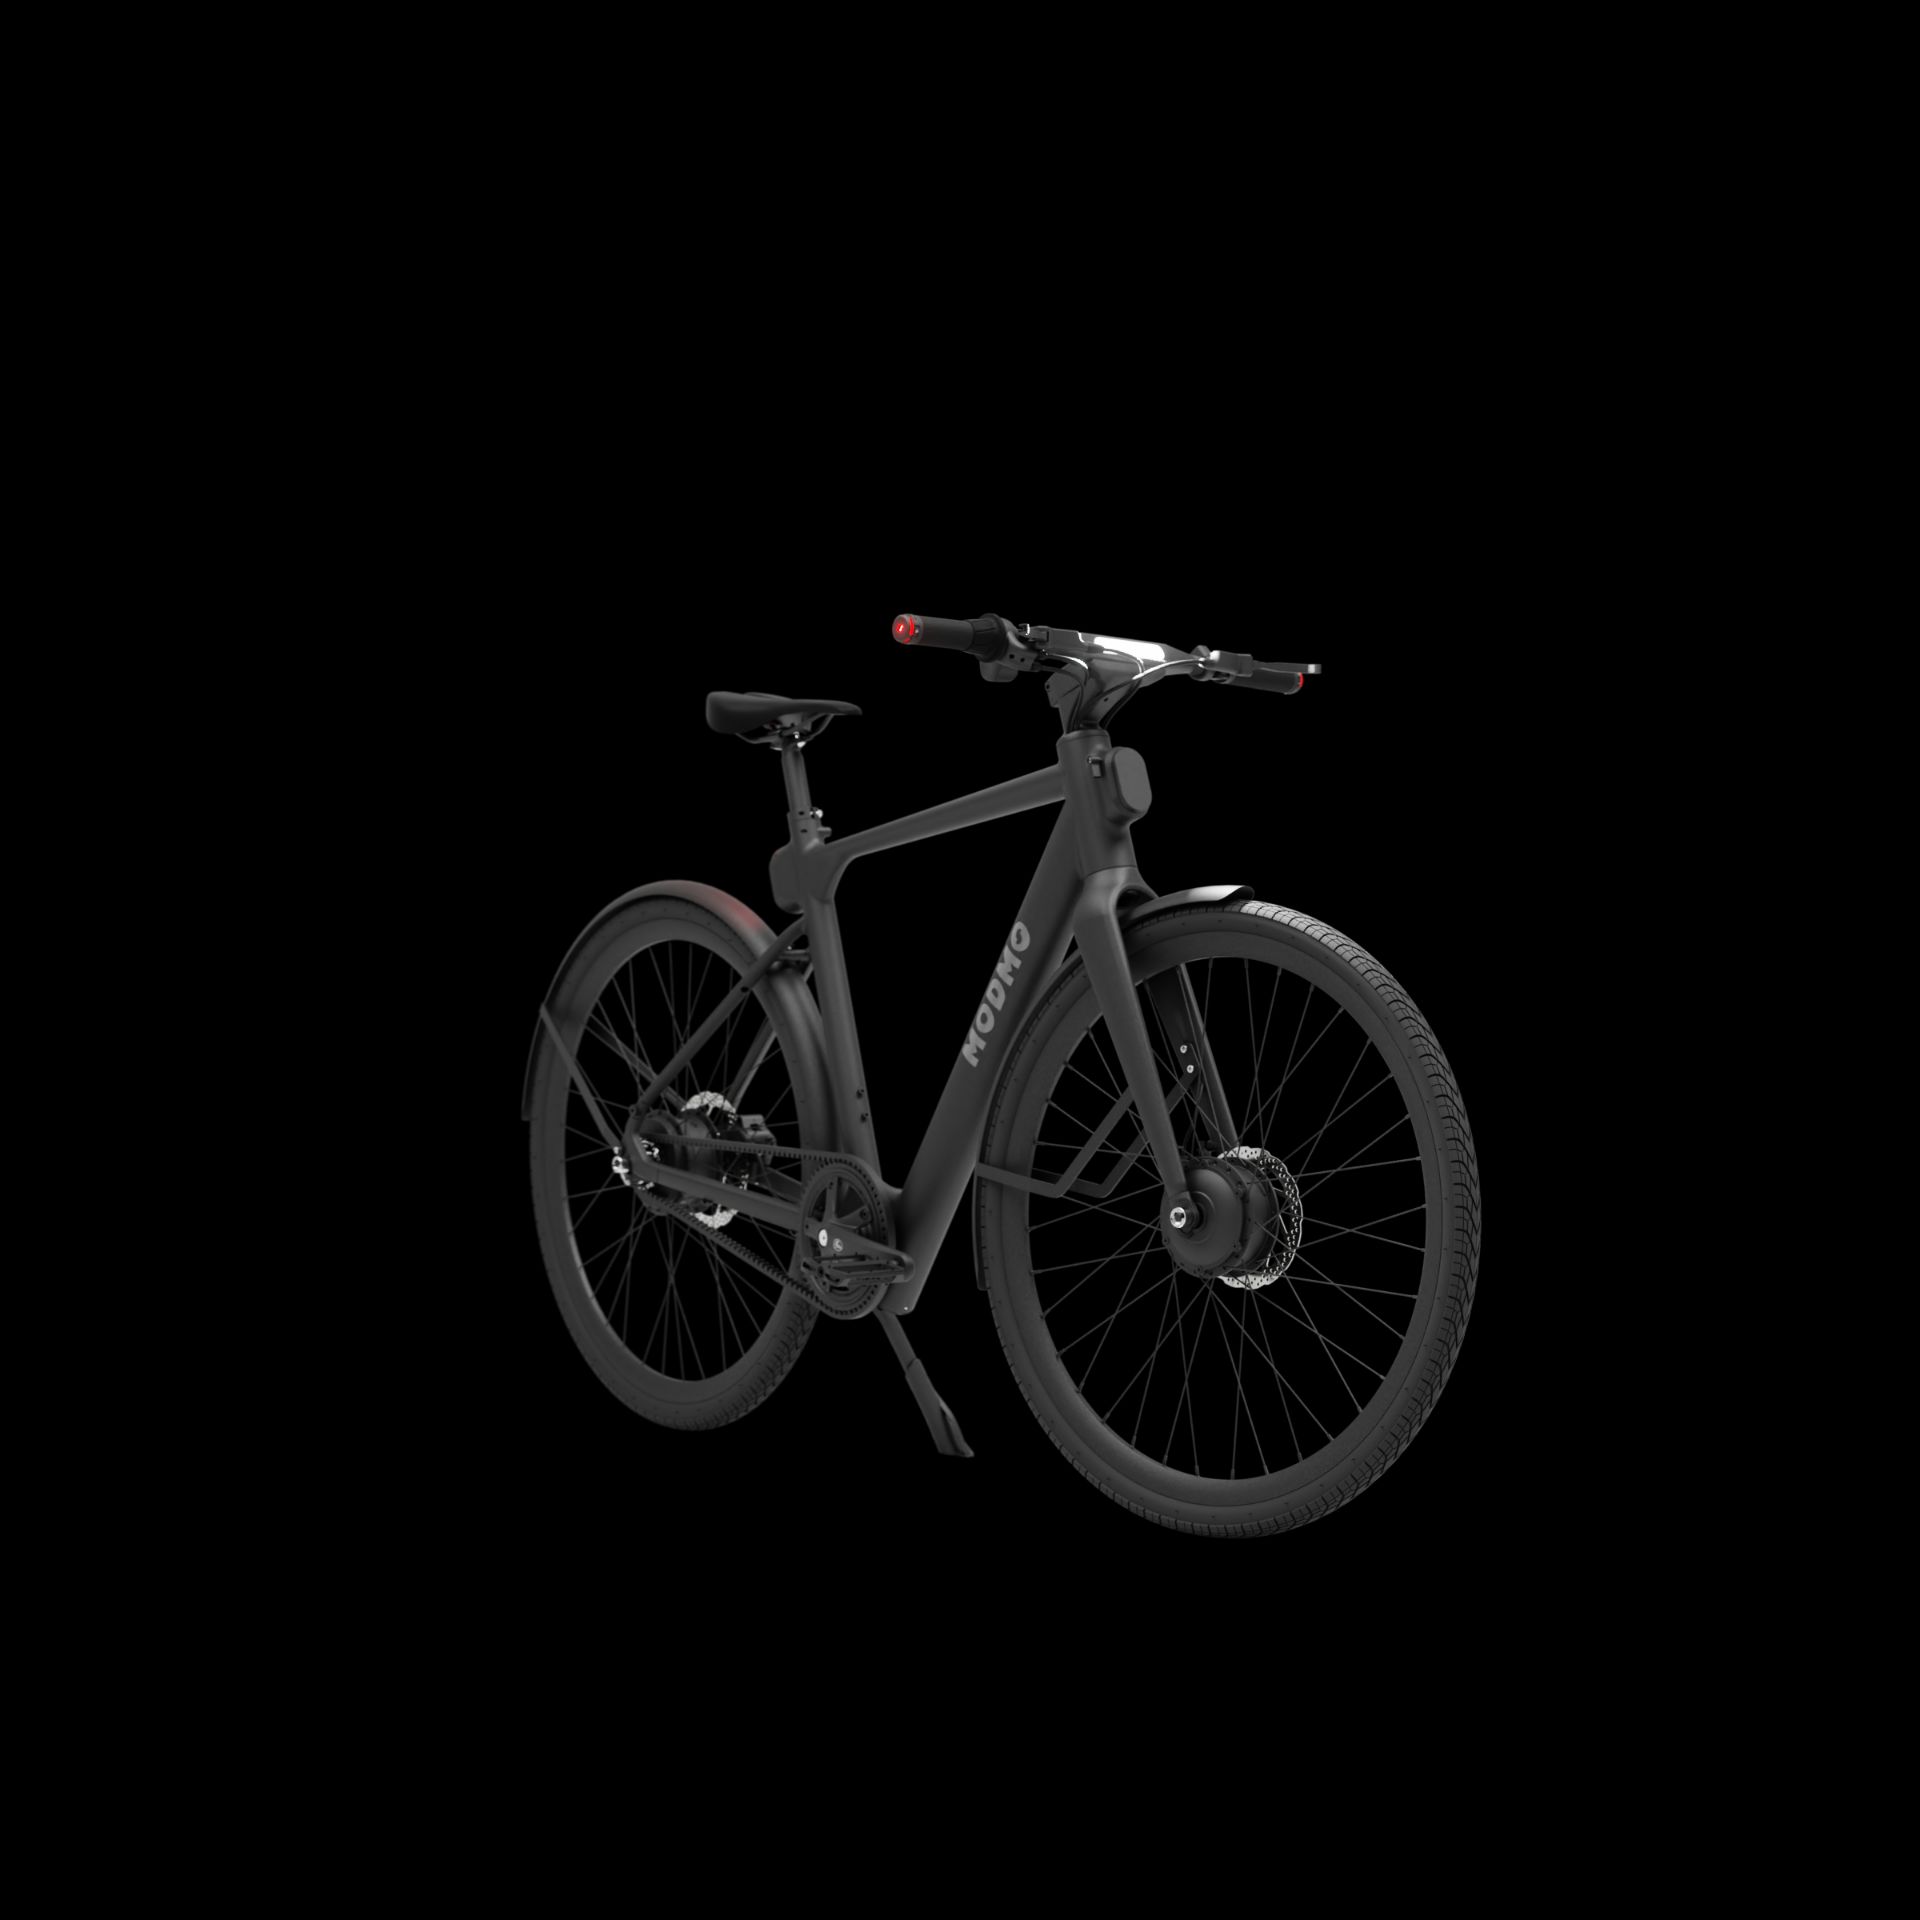 Modmo Saigon+ Electric Bicycle - RRP £2800 - Size M (Rider: 155-175cm) - Image 5 of 19